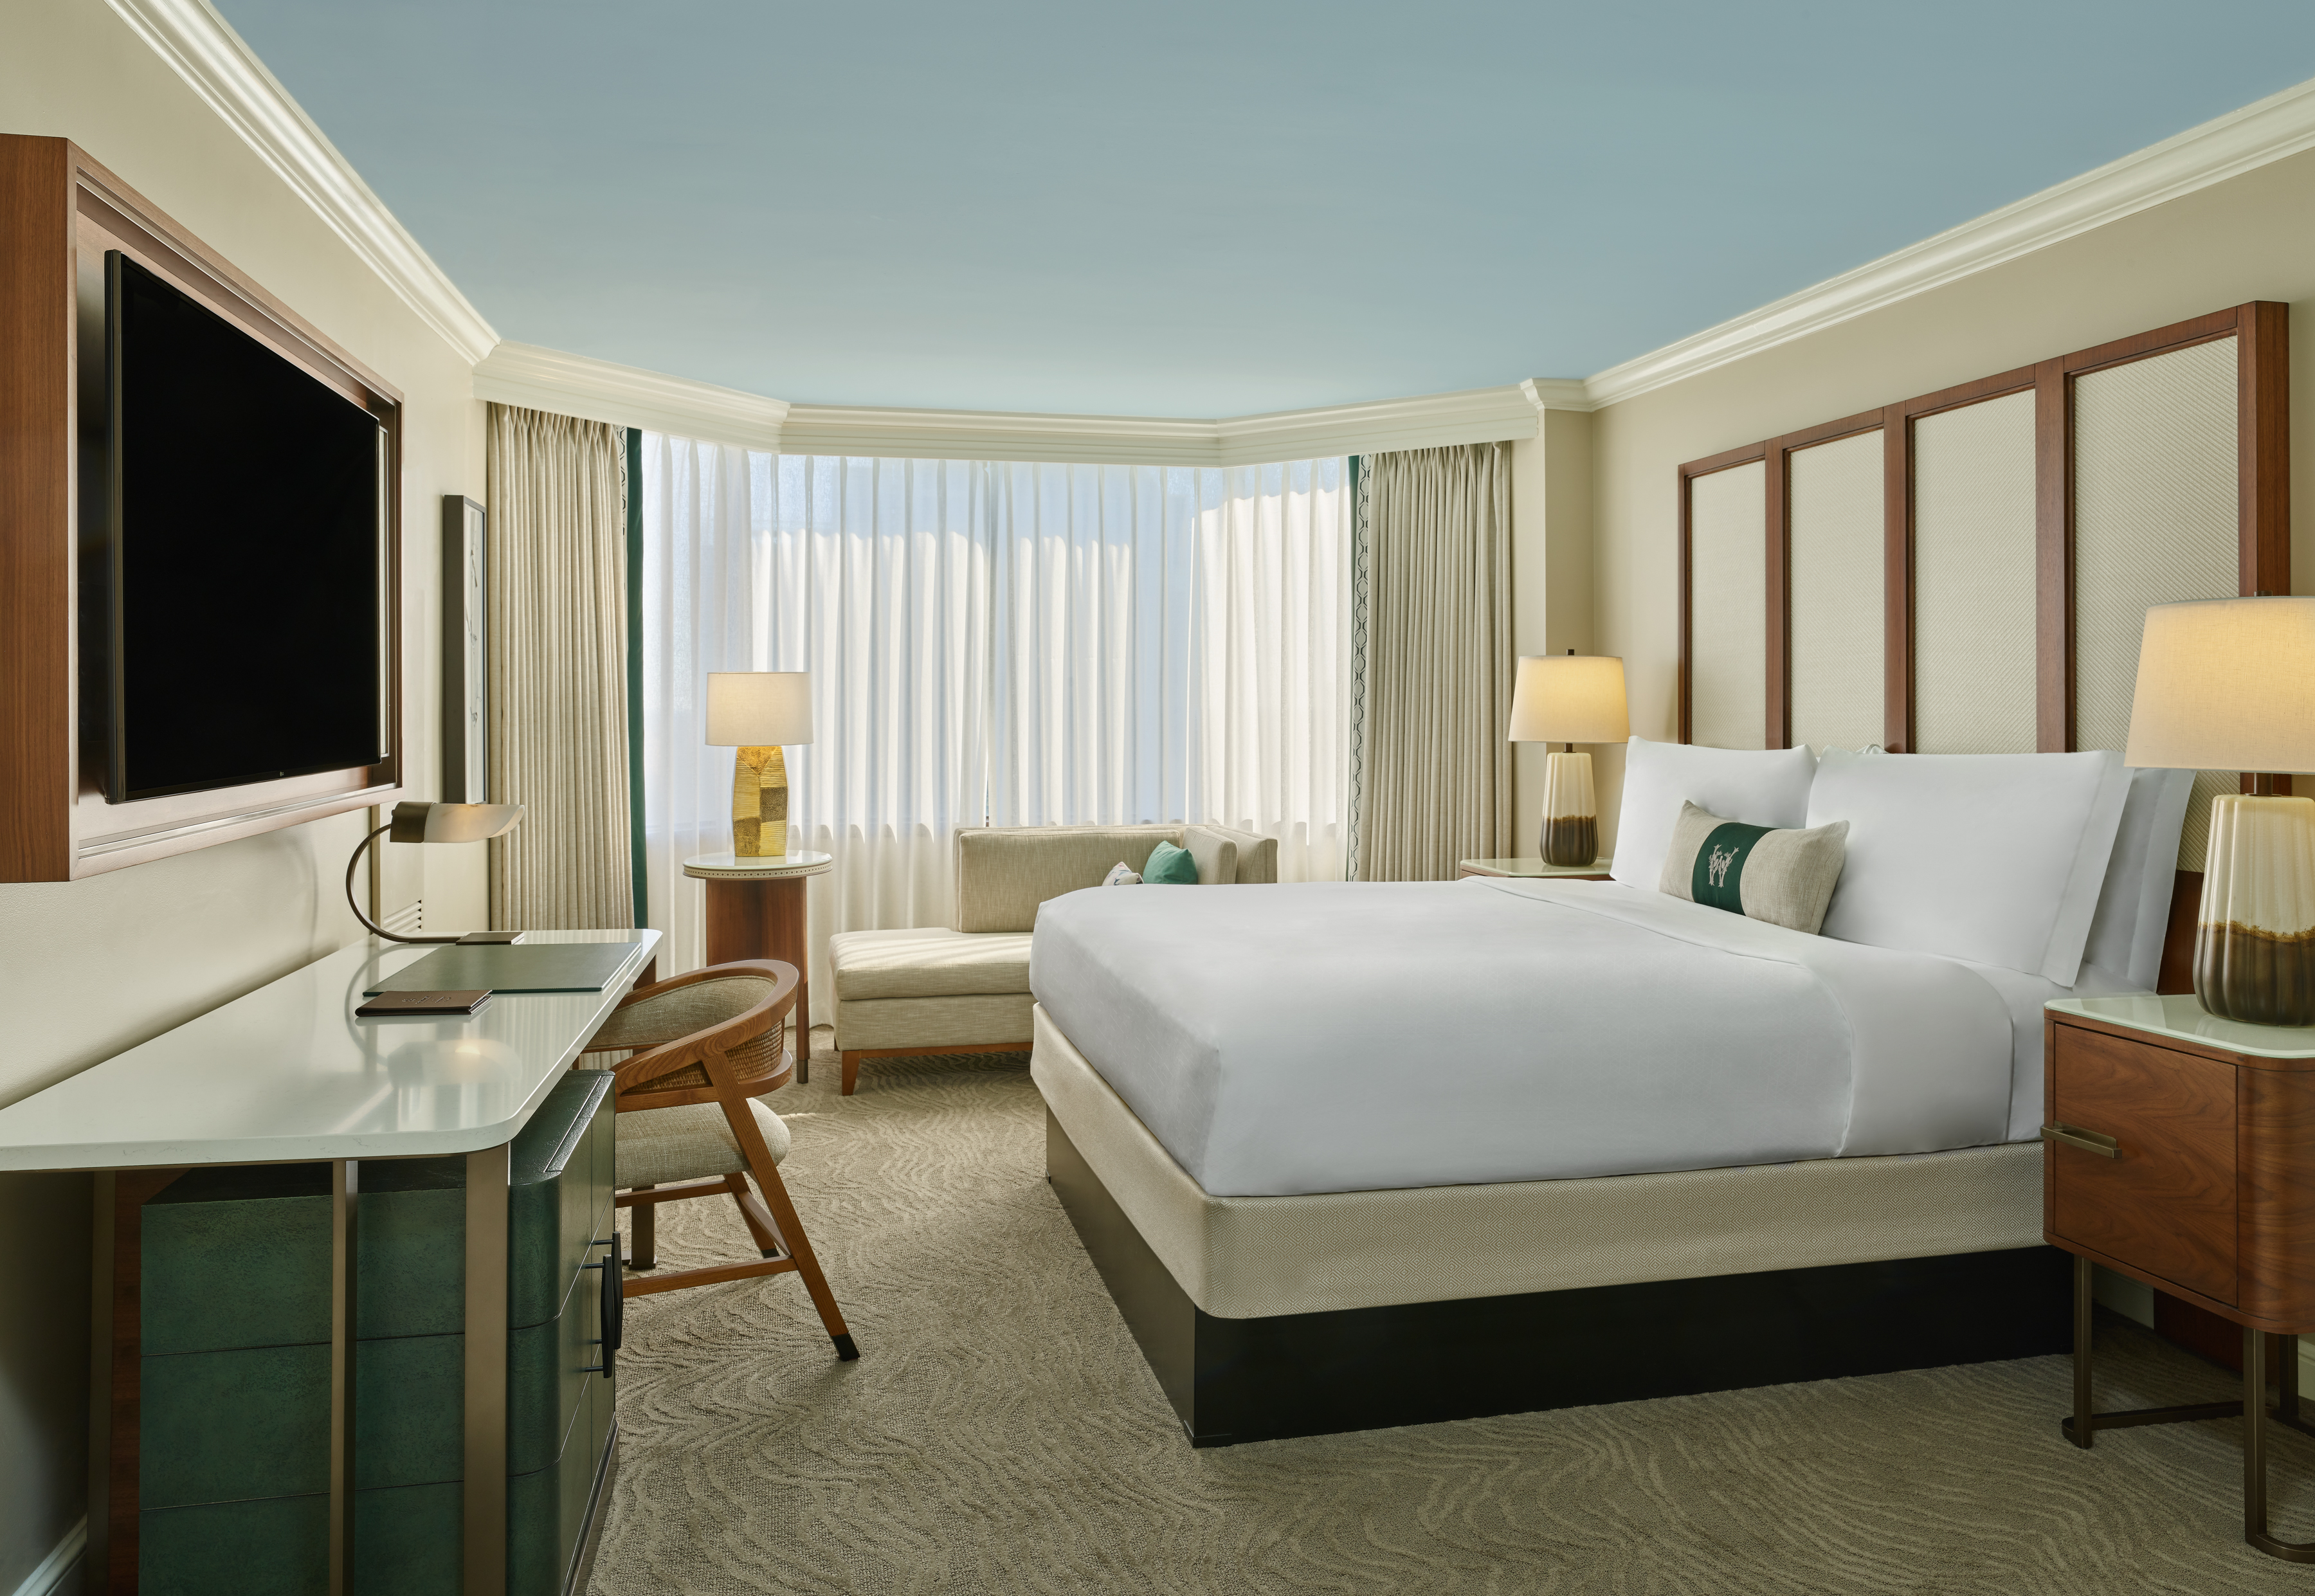 Luxury Hotel Rooms In Buckhead Atlanta Ga The Whitley